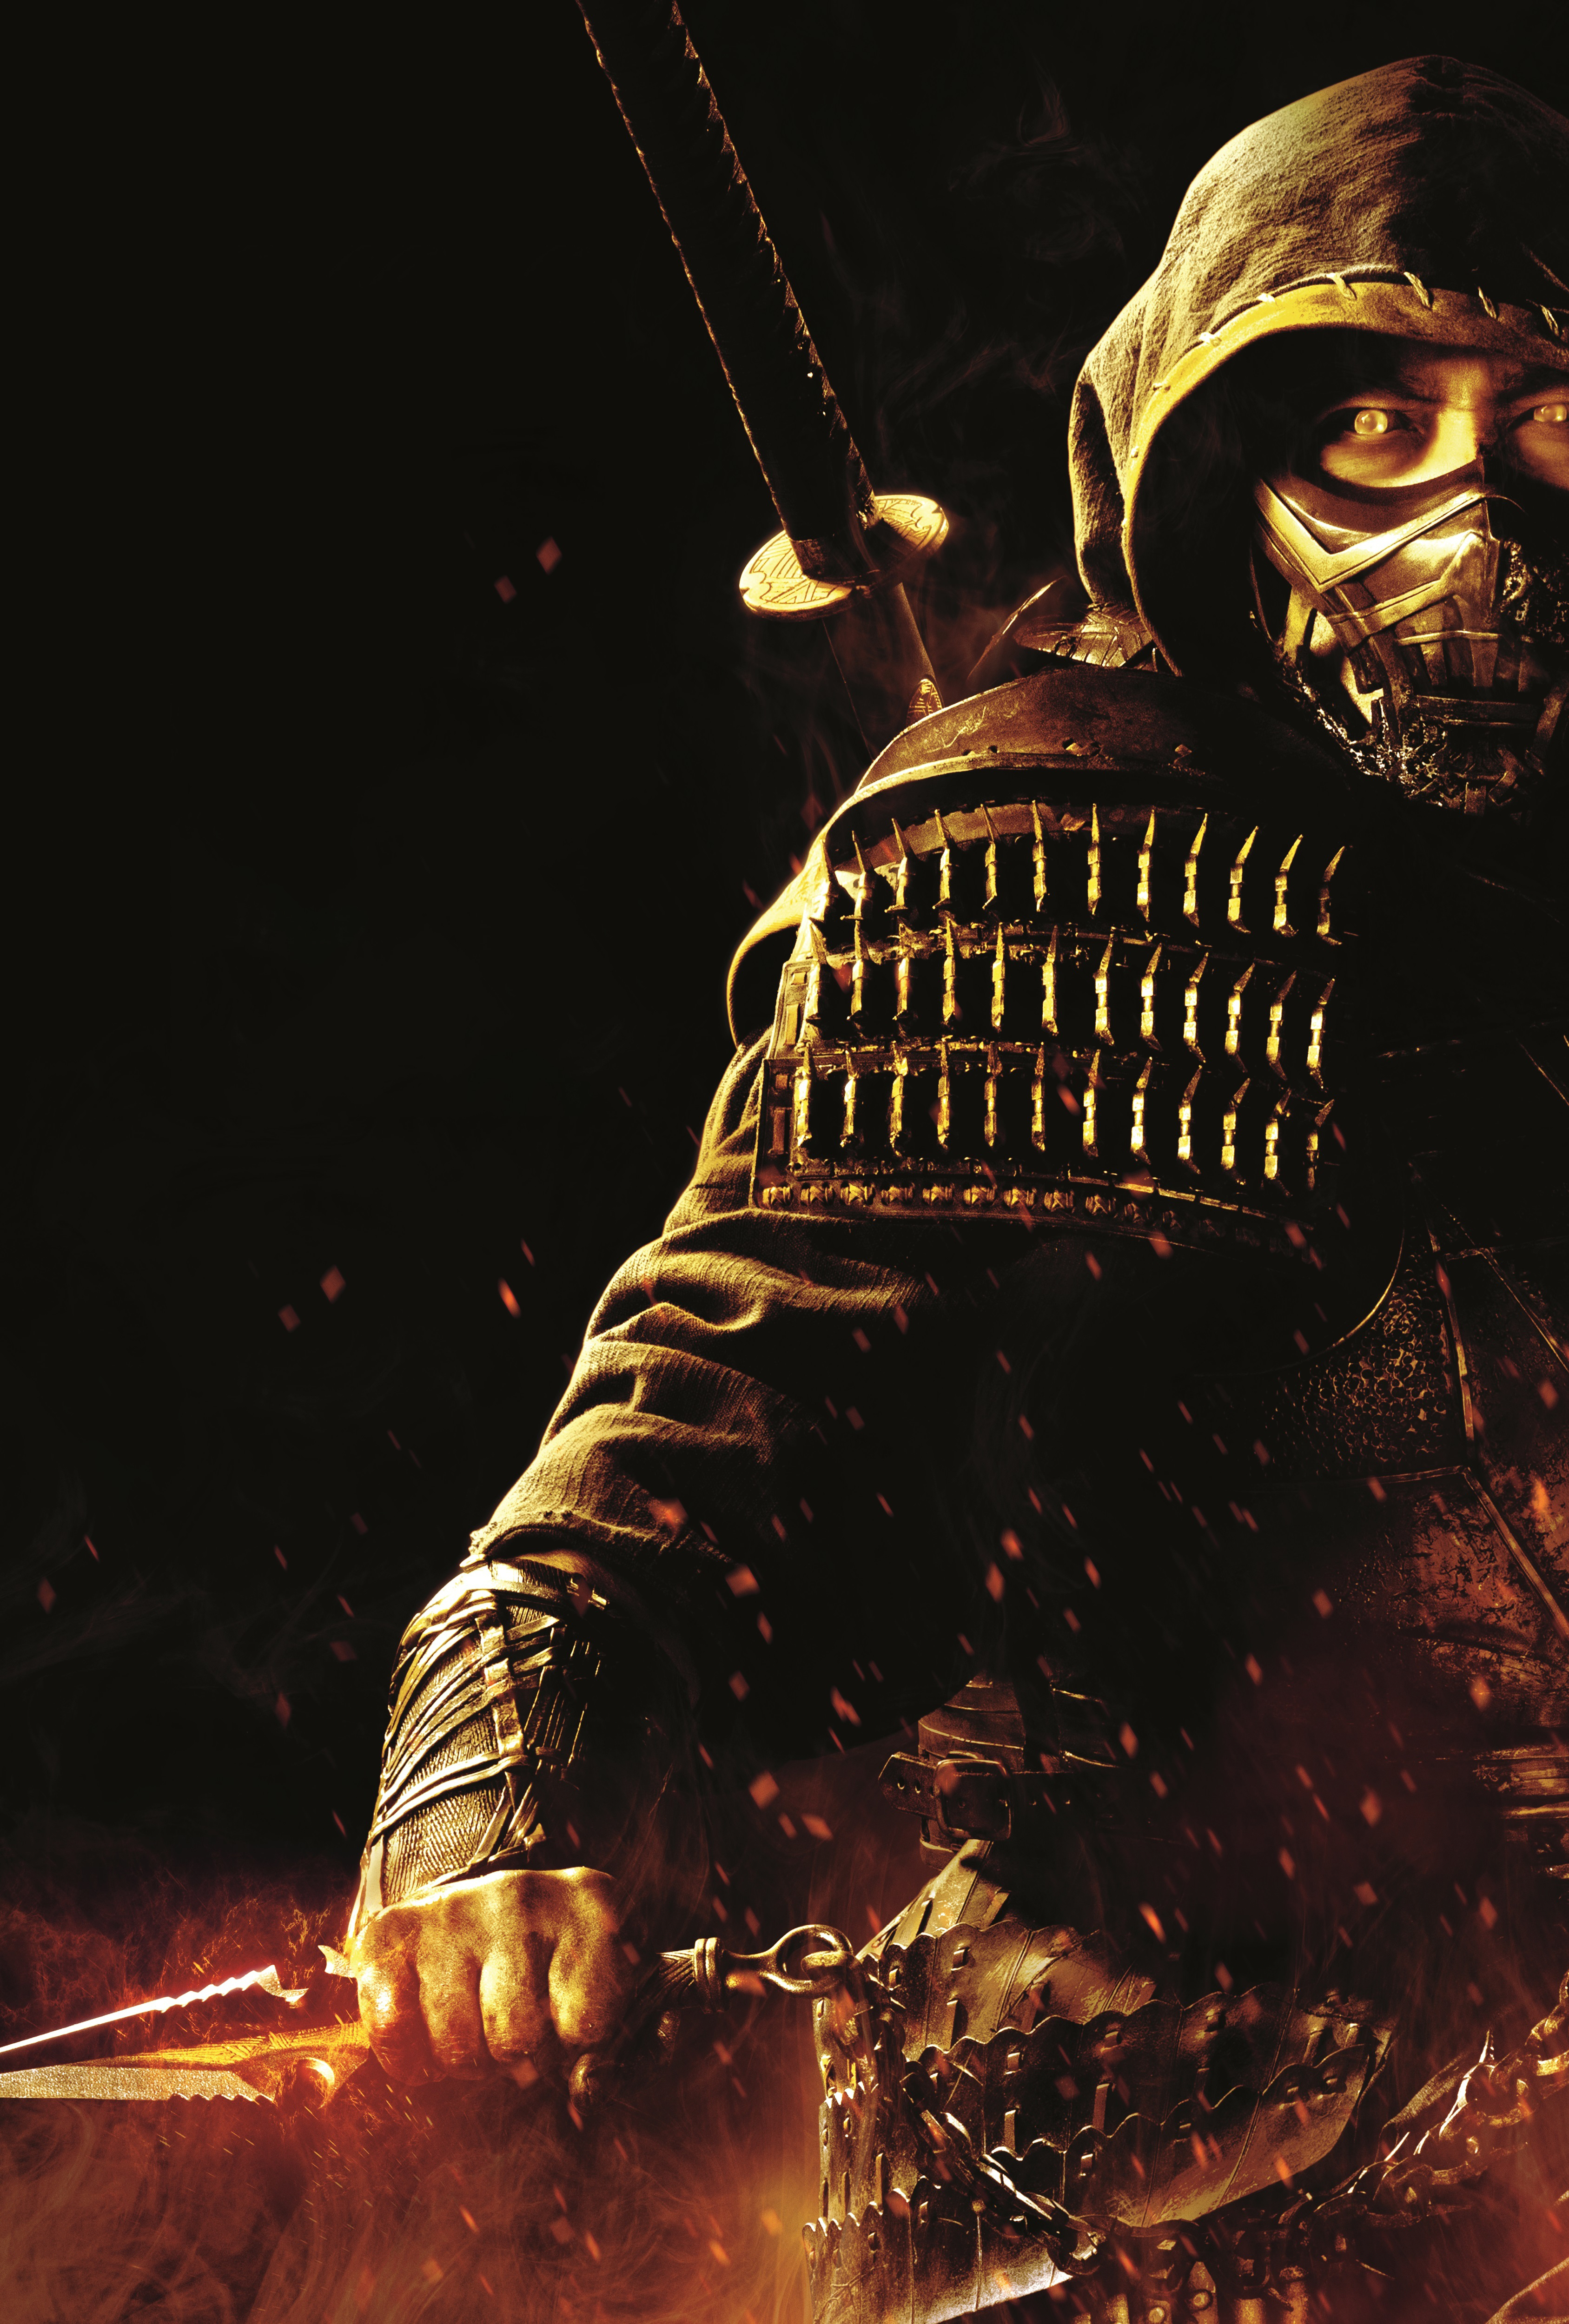 Wallpaper Spawn, Spawn, Mortal Kombat 11, MK 11, Mortal Kombat 11 images  for desktop, section игры - download